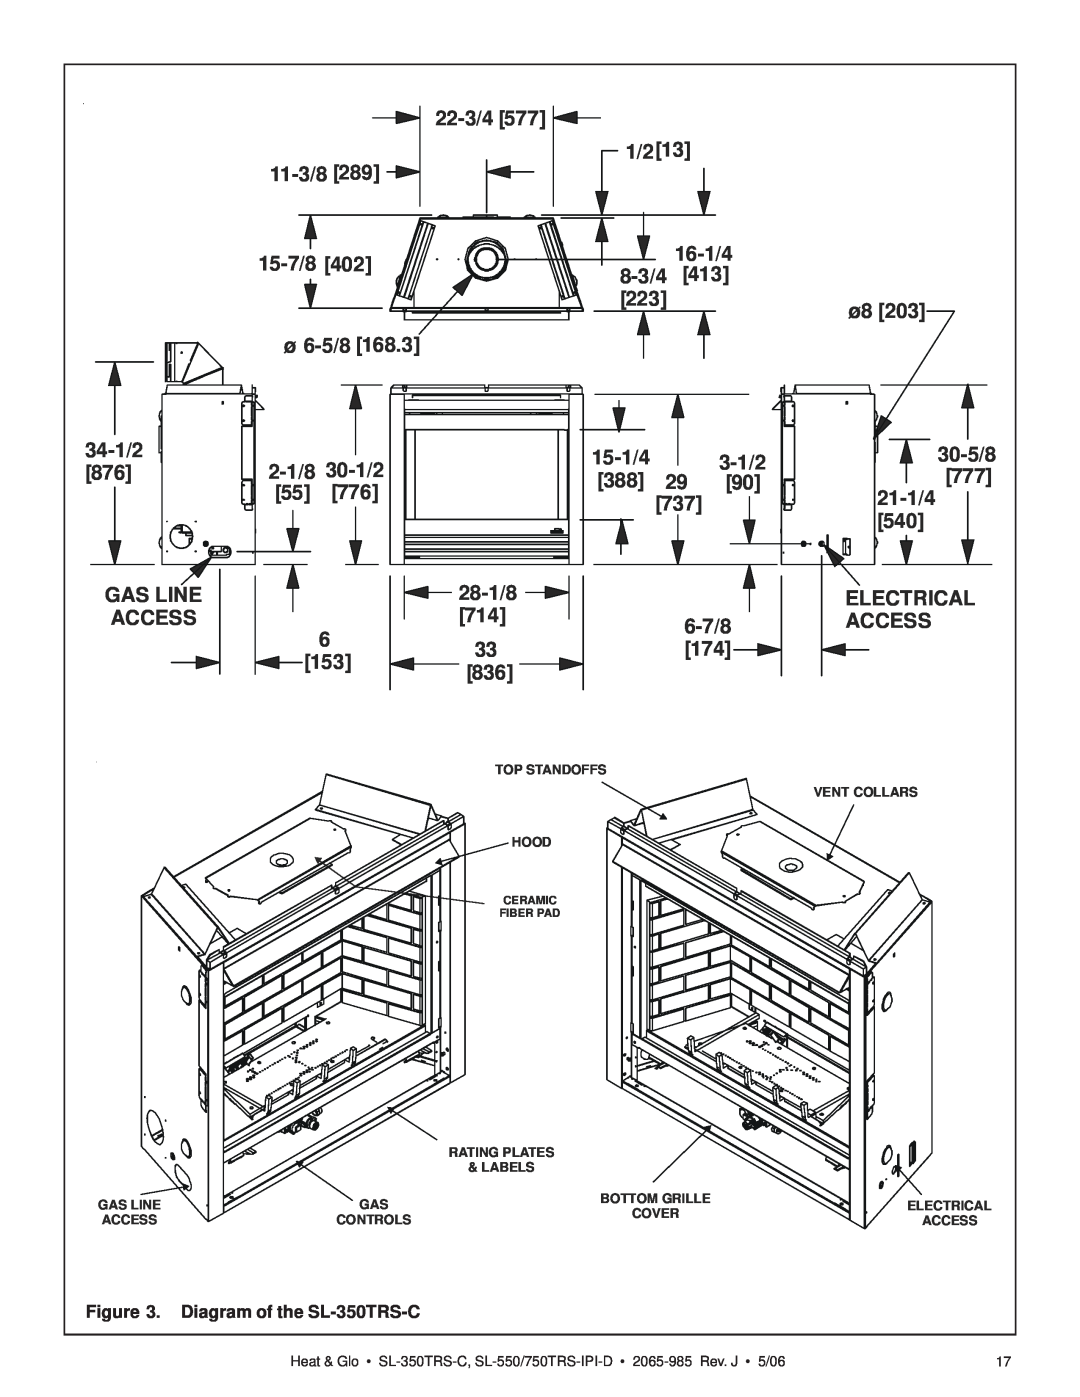 Heat & Glo LifeStyle SL-750TRS-IPI-D owner manual 22-3/4577 